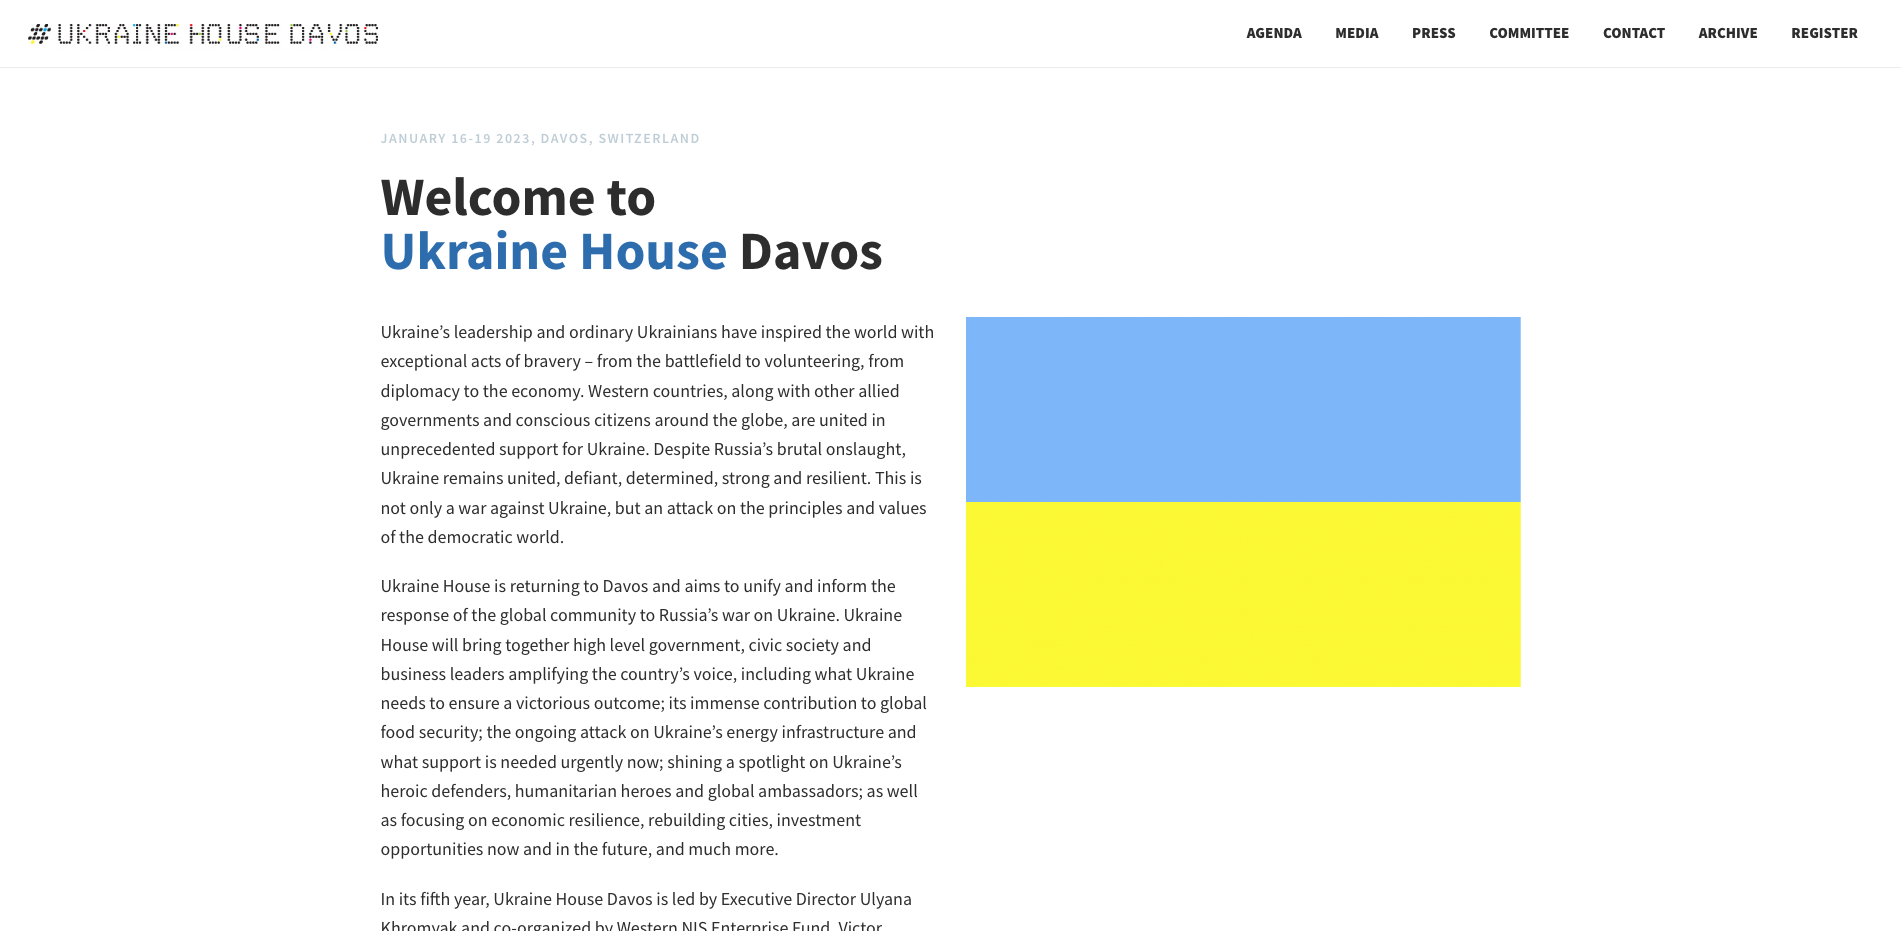 Ukraine House Davos 2023 picture